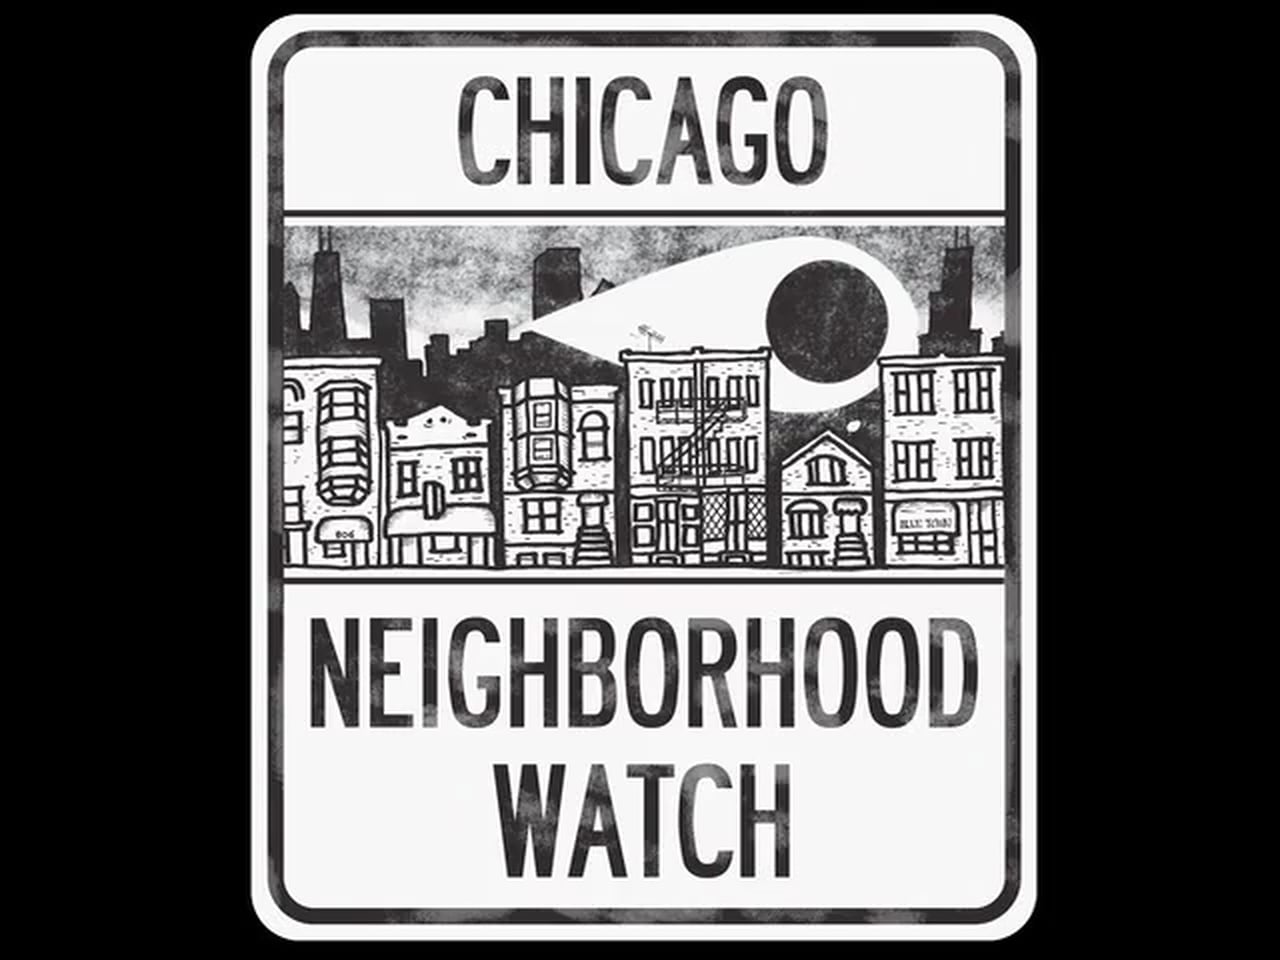 Chicago Neighborhood Watch cover art